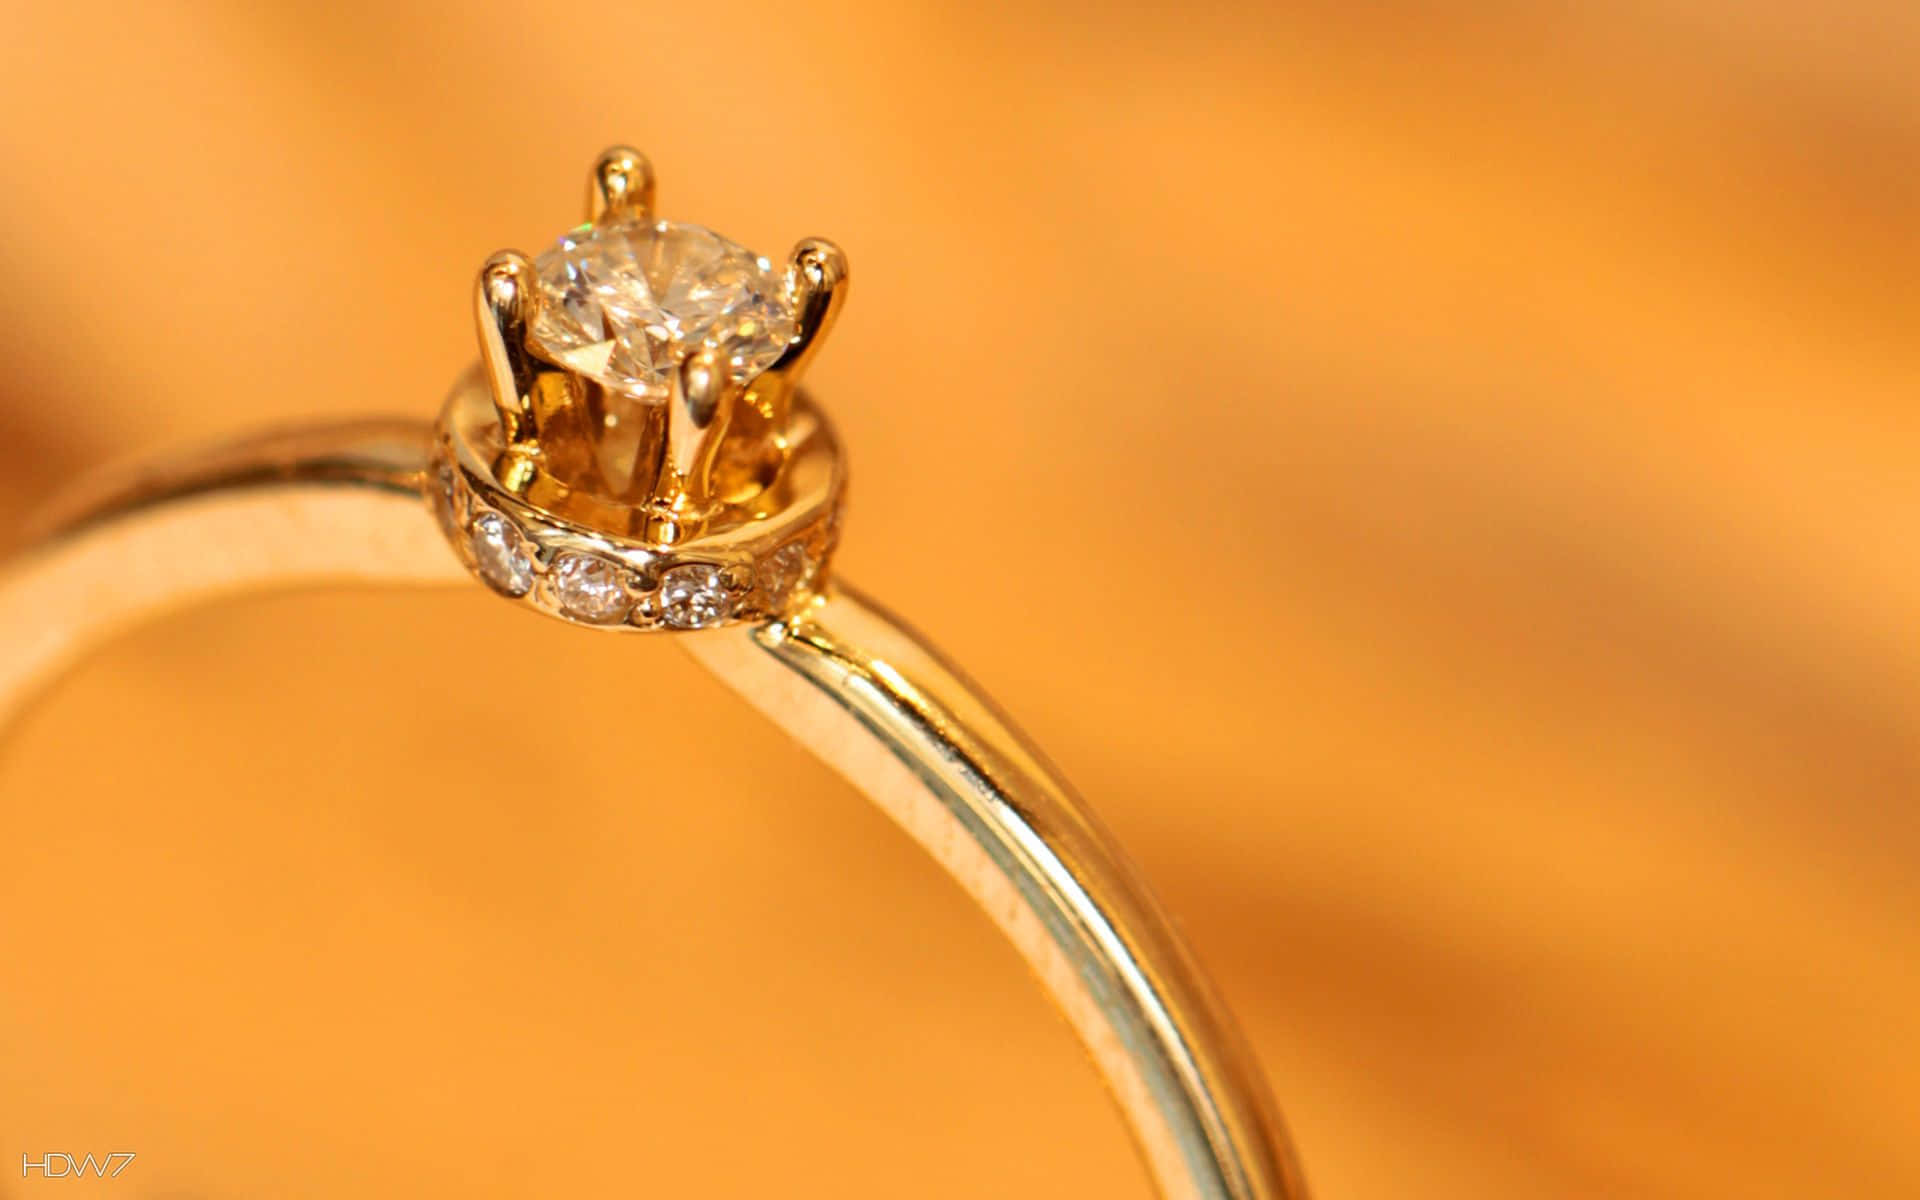 Ring Diamond Jewelry - Free photo on Pixabay - Pixabay